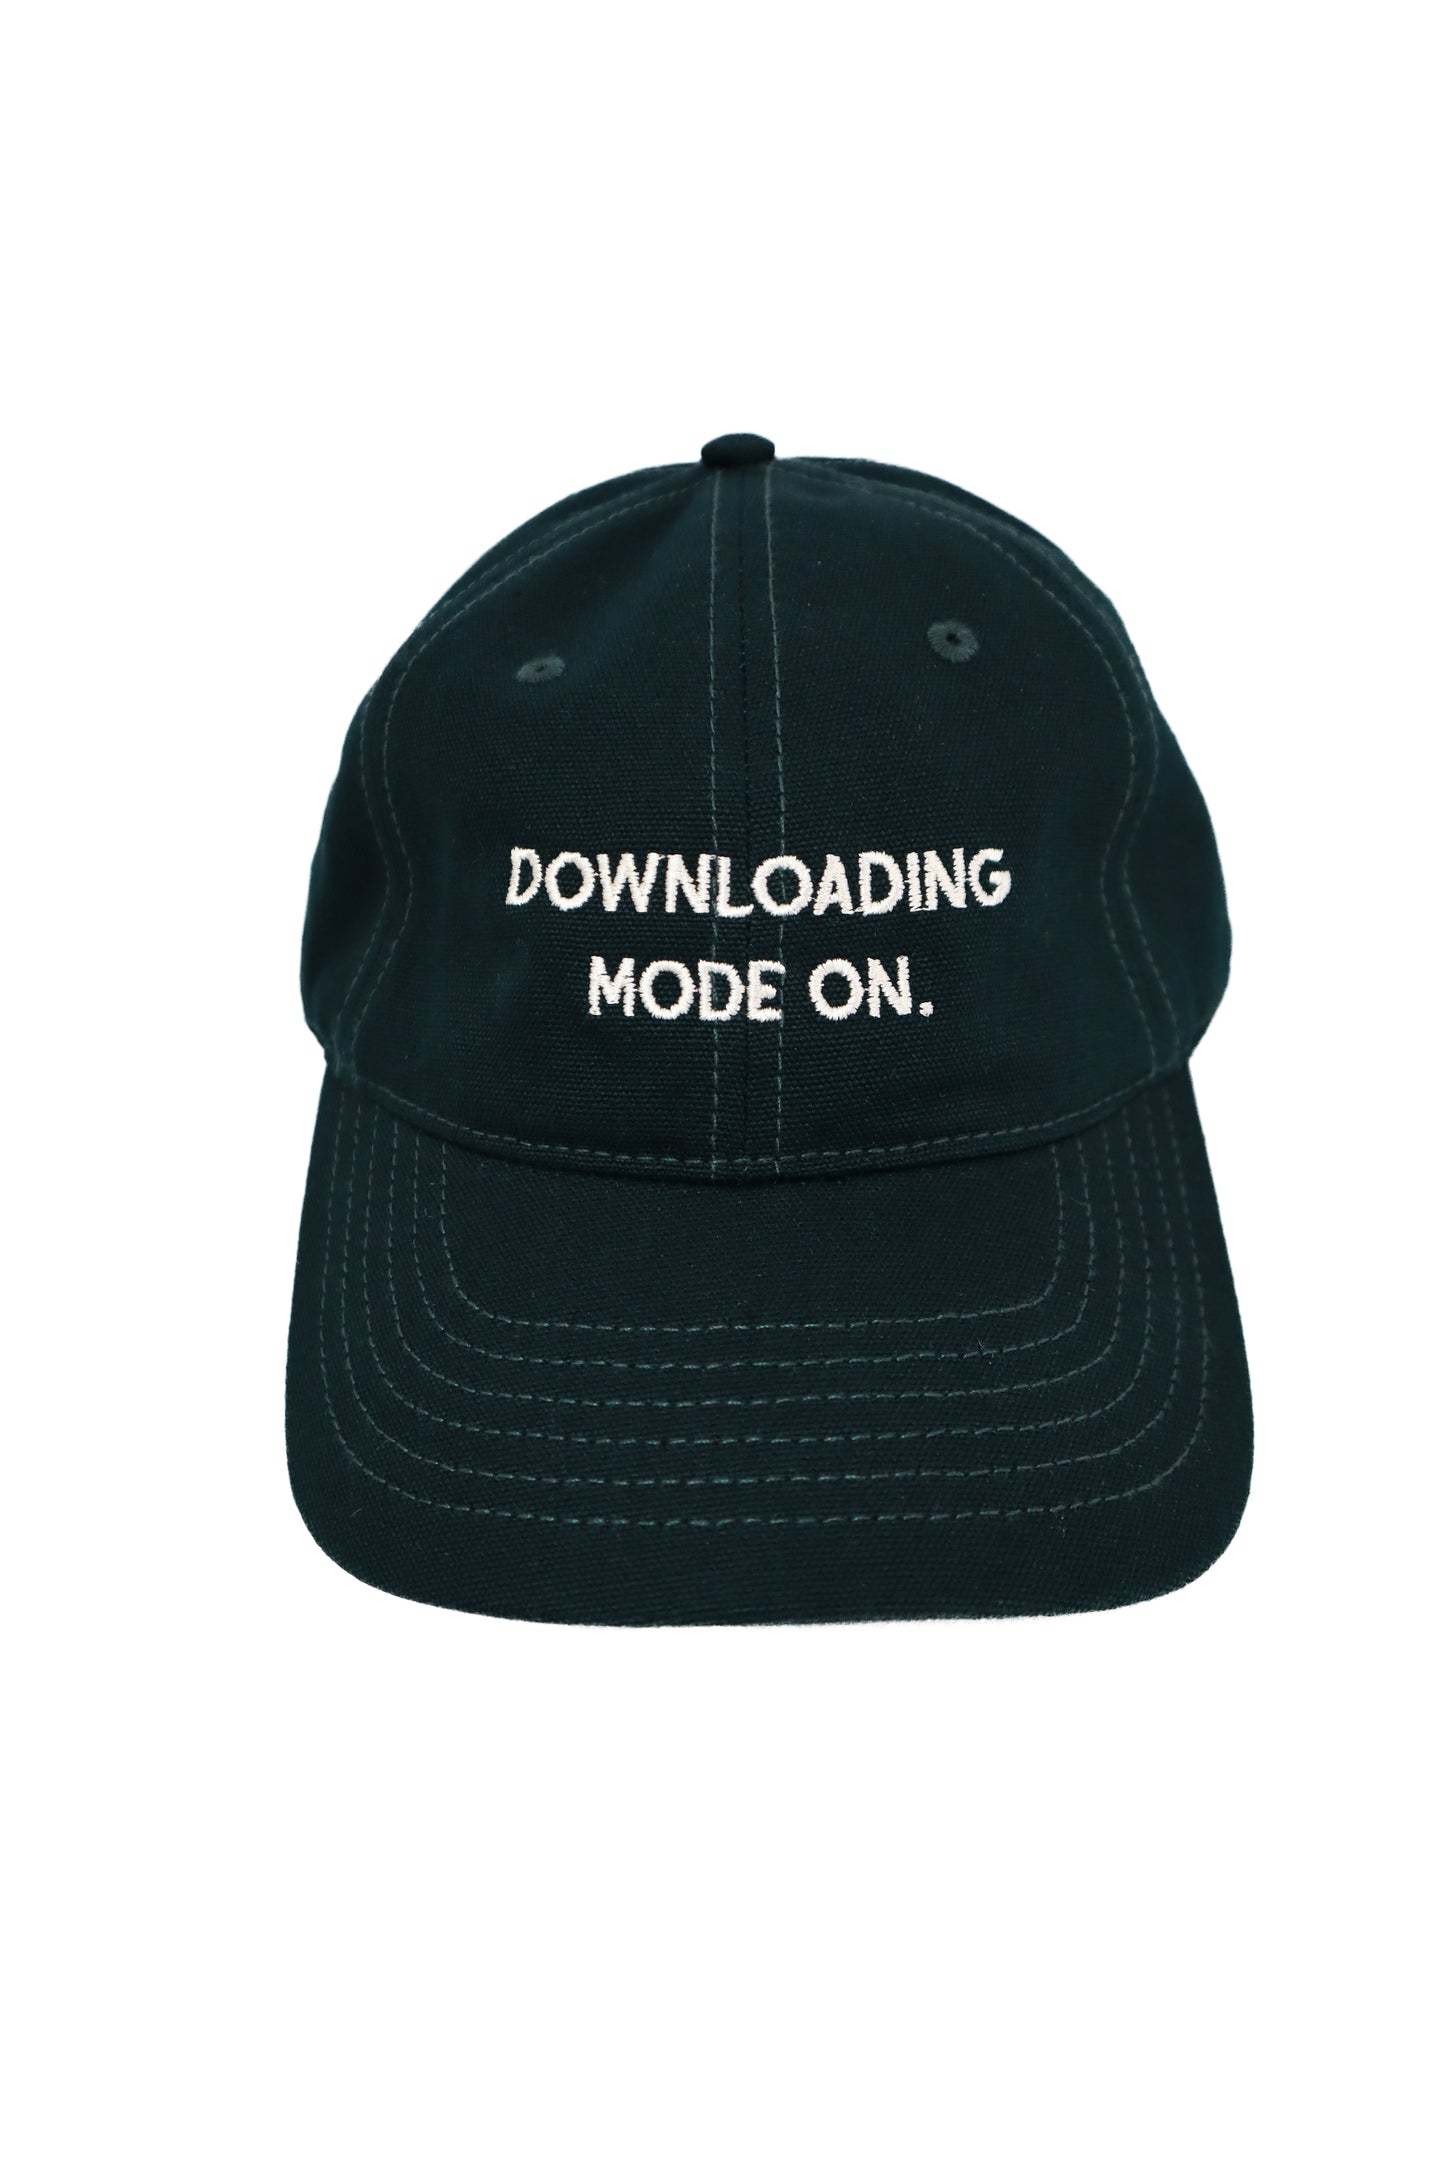 "Downloading Mode On." Cap